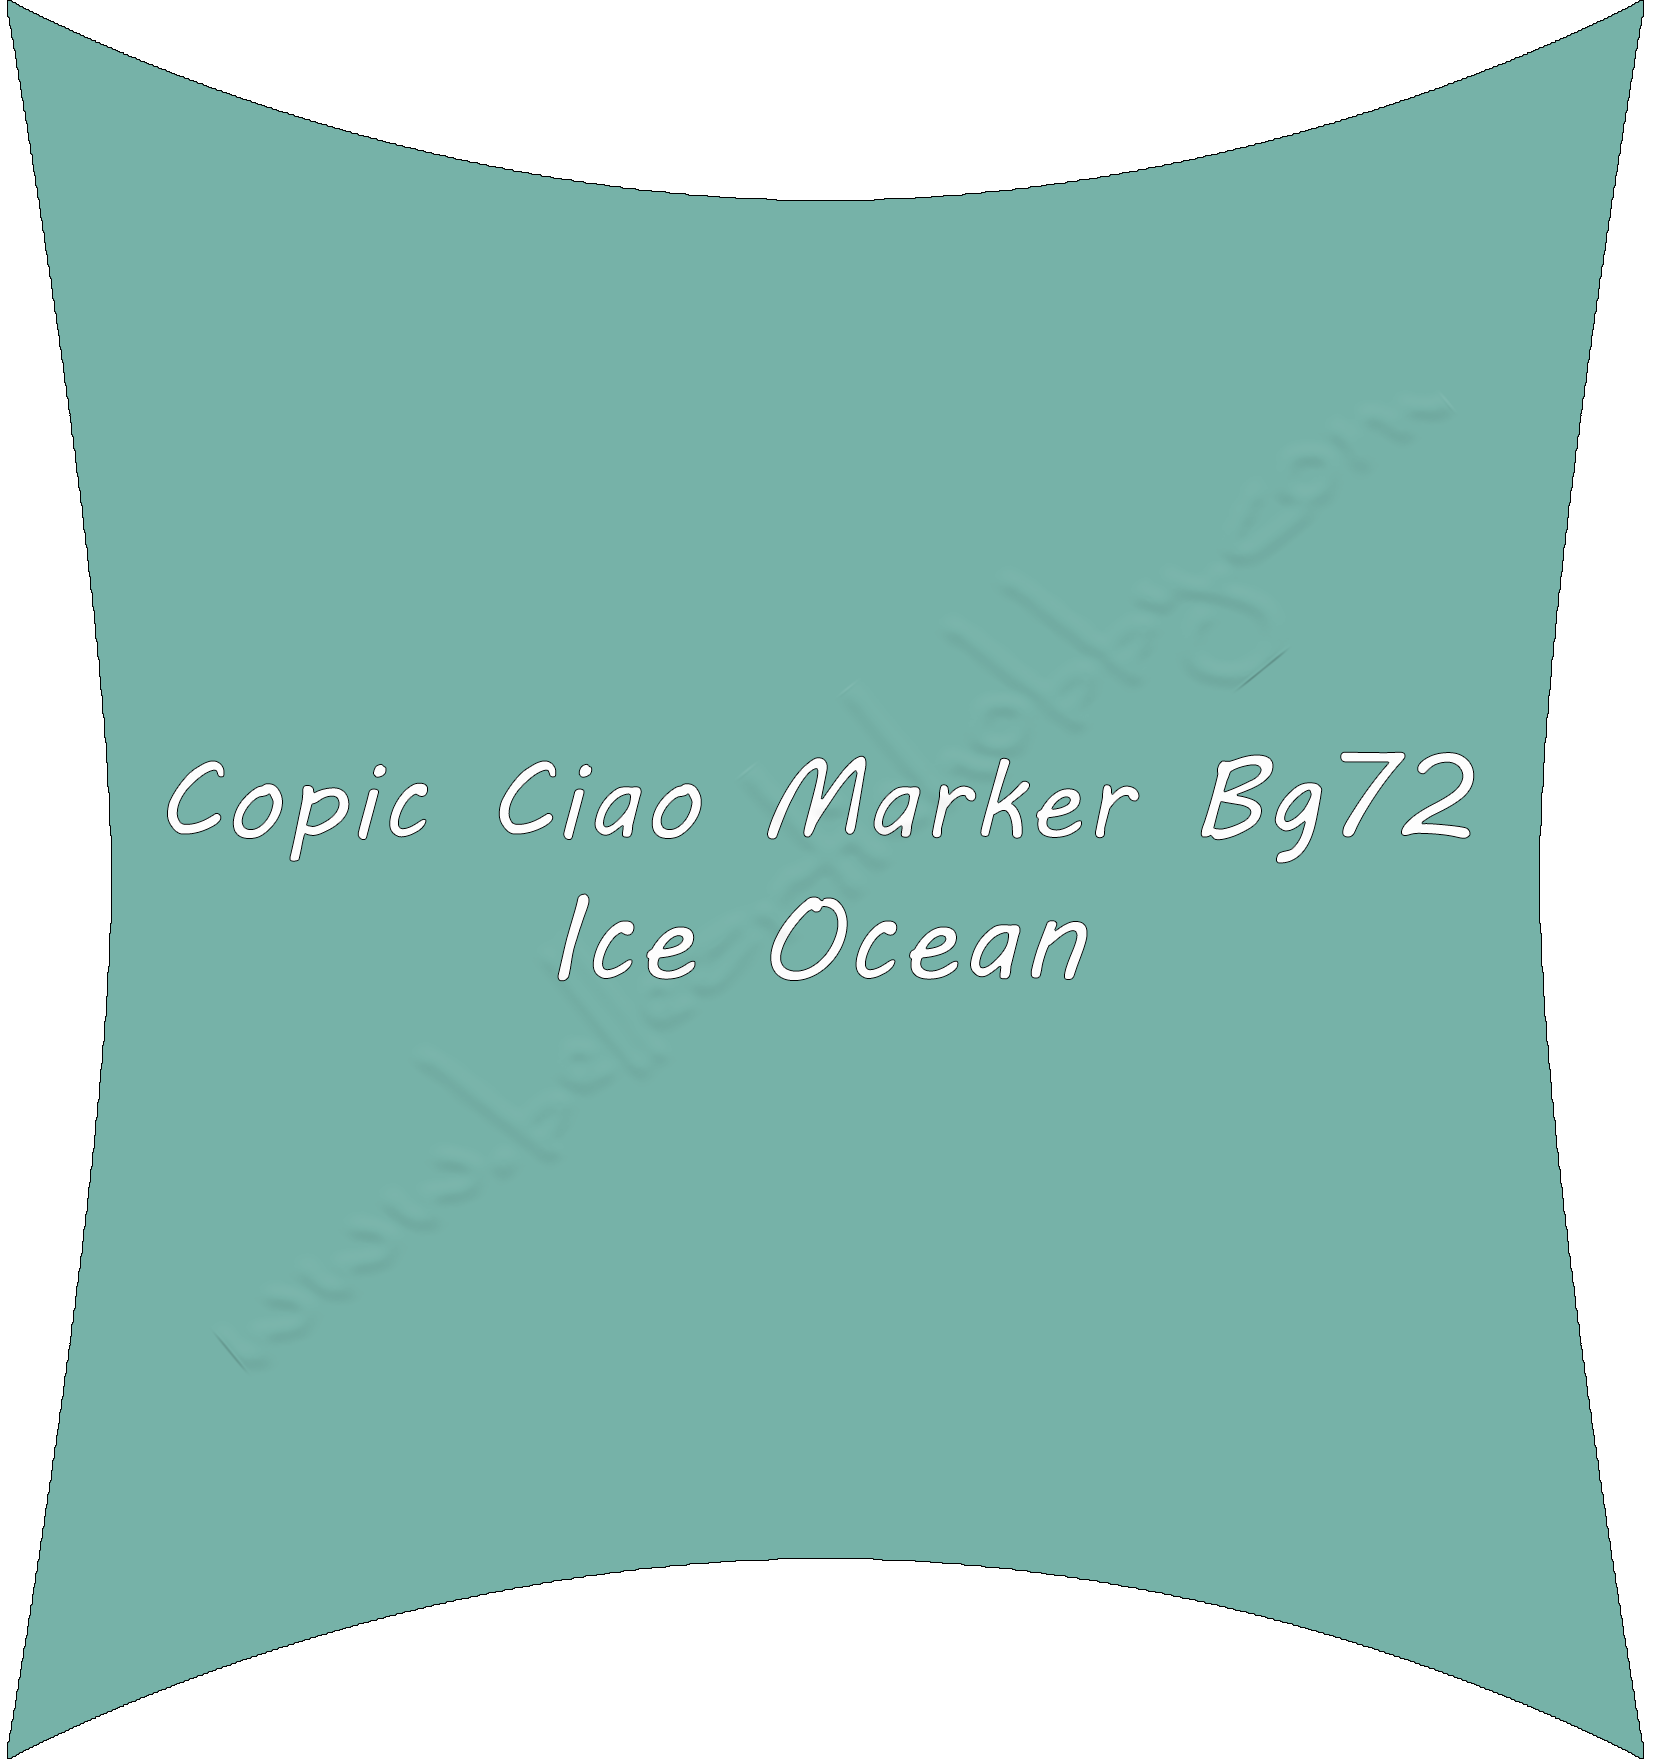 Bg72 Ice Ocean